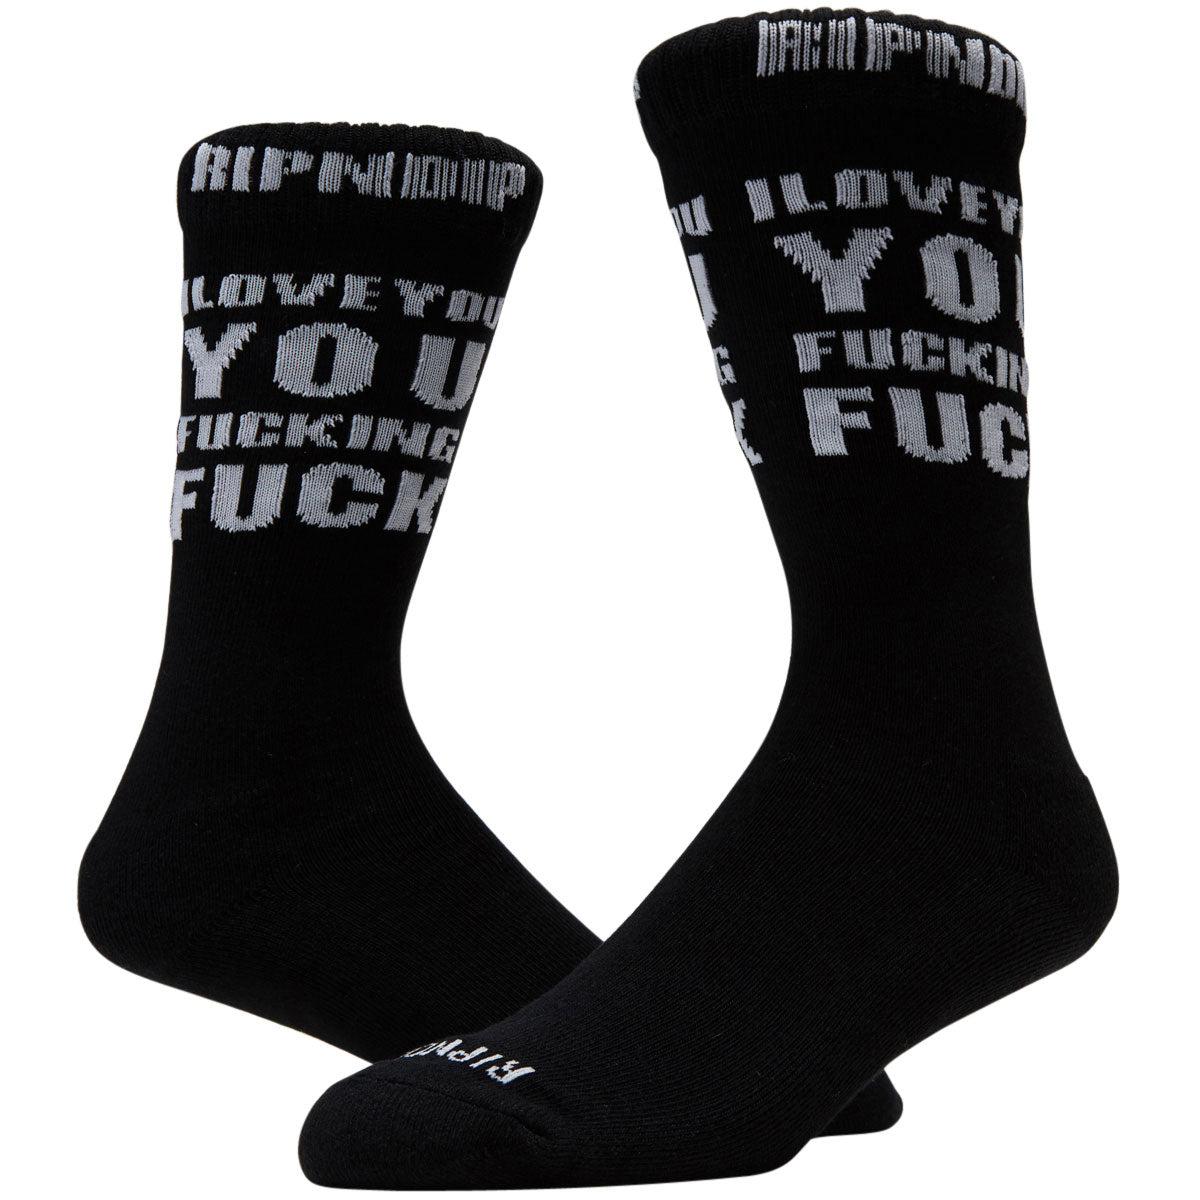 RIPNDIP Ily Fuckin Fuck Socks - Black image 2